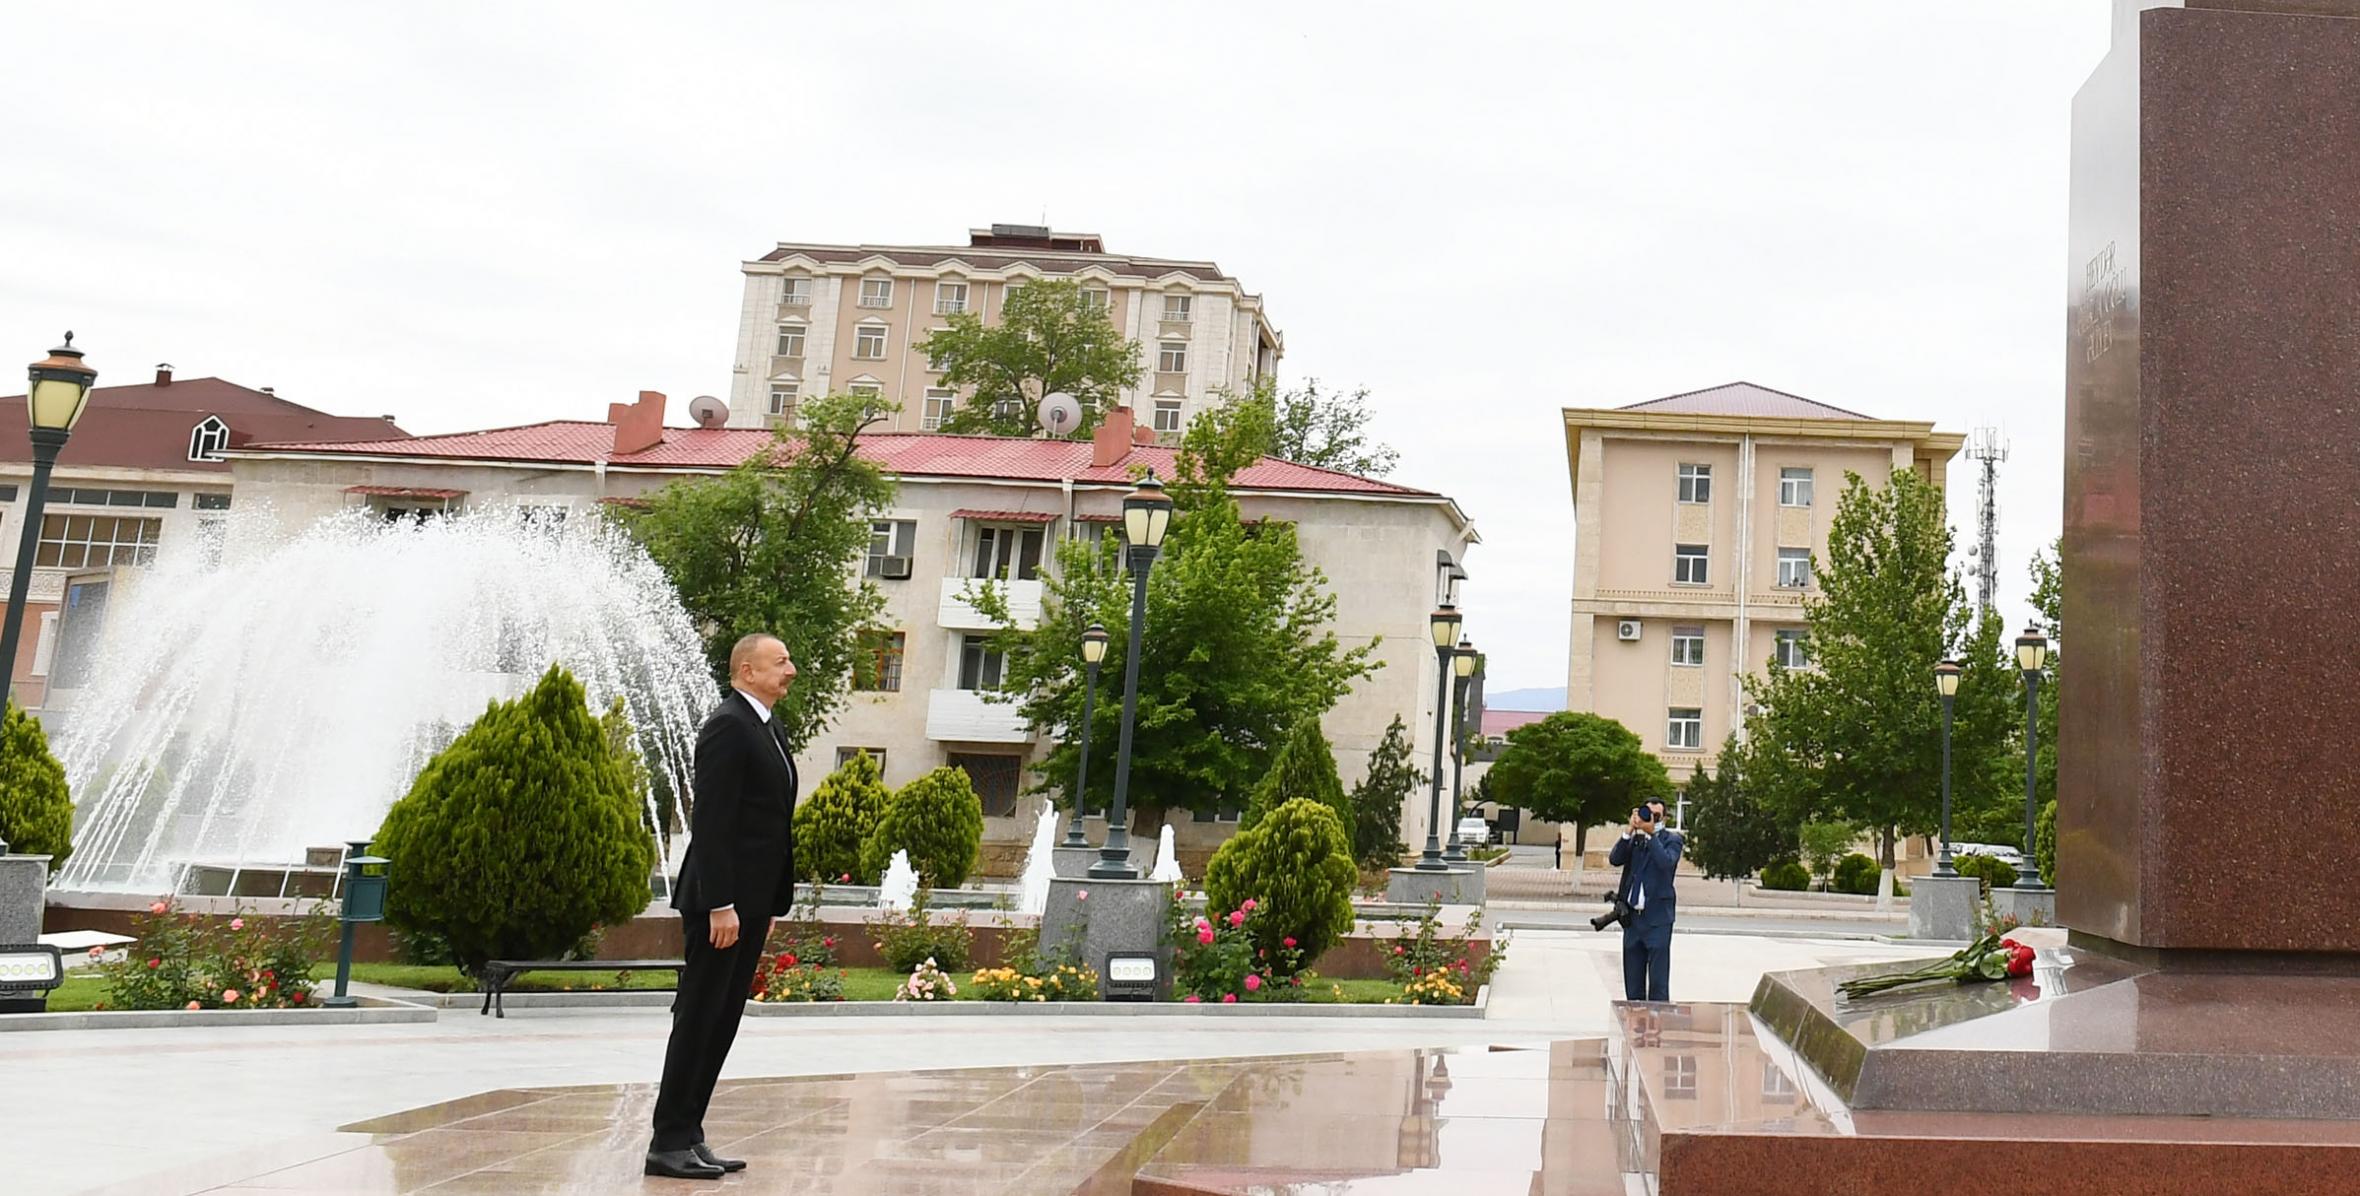 Ilham Aliyev visited statue of national leader Heydar Aliyev in Nakhchivan